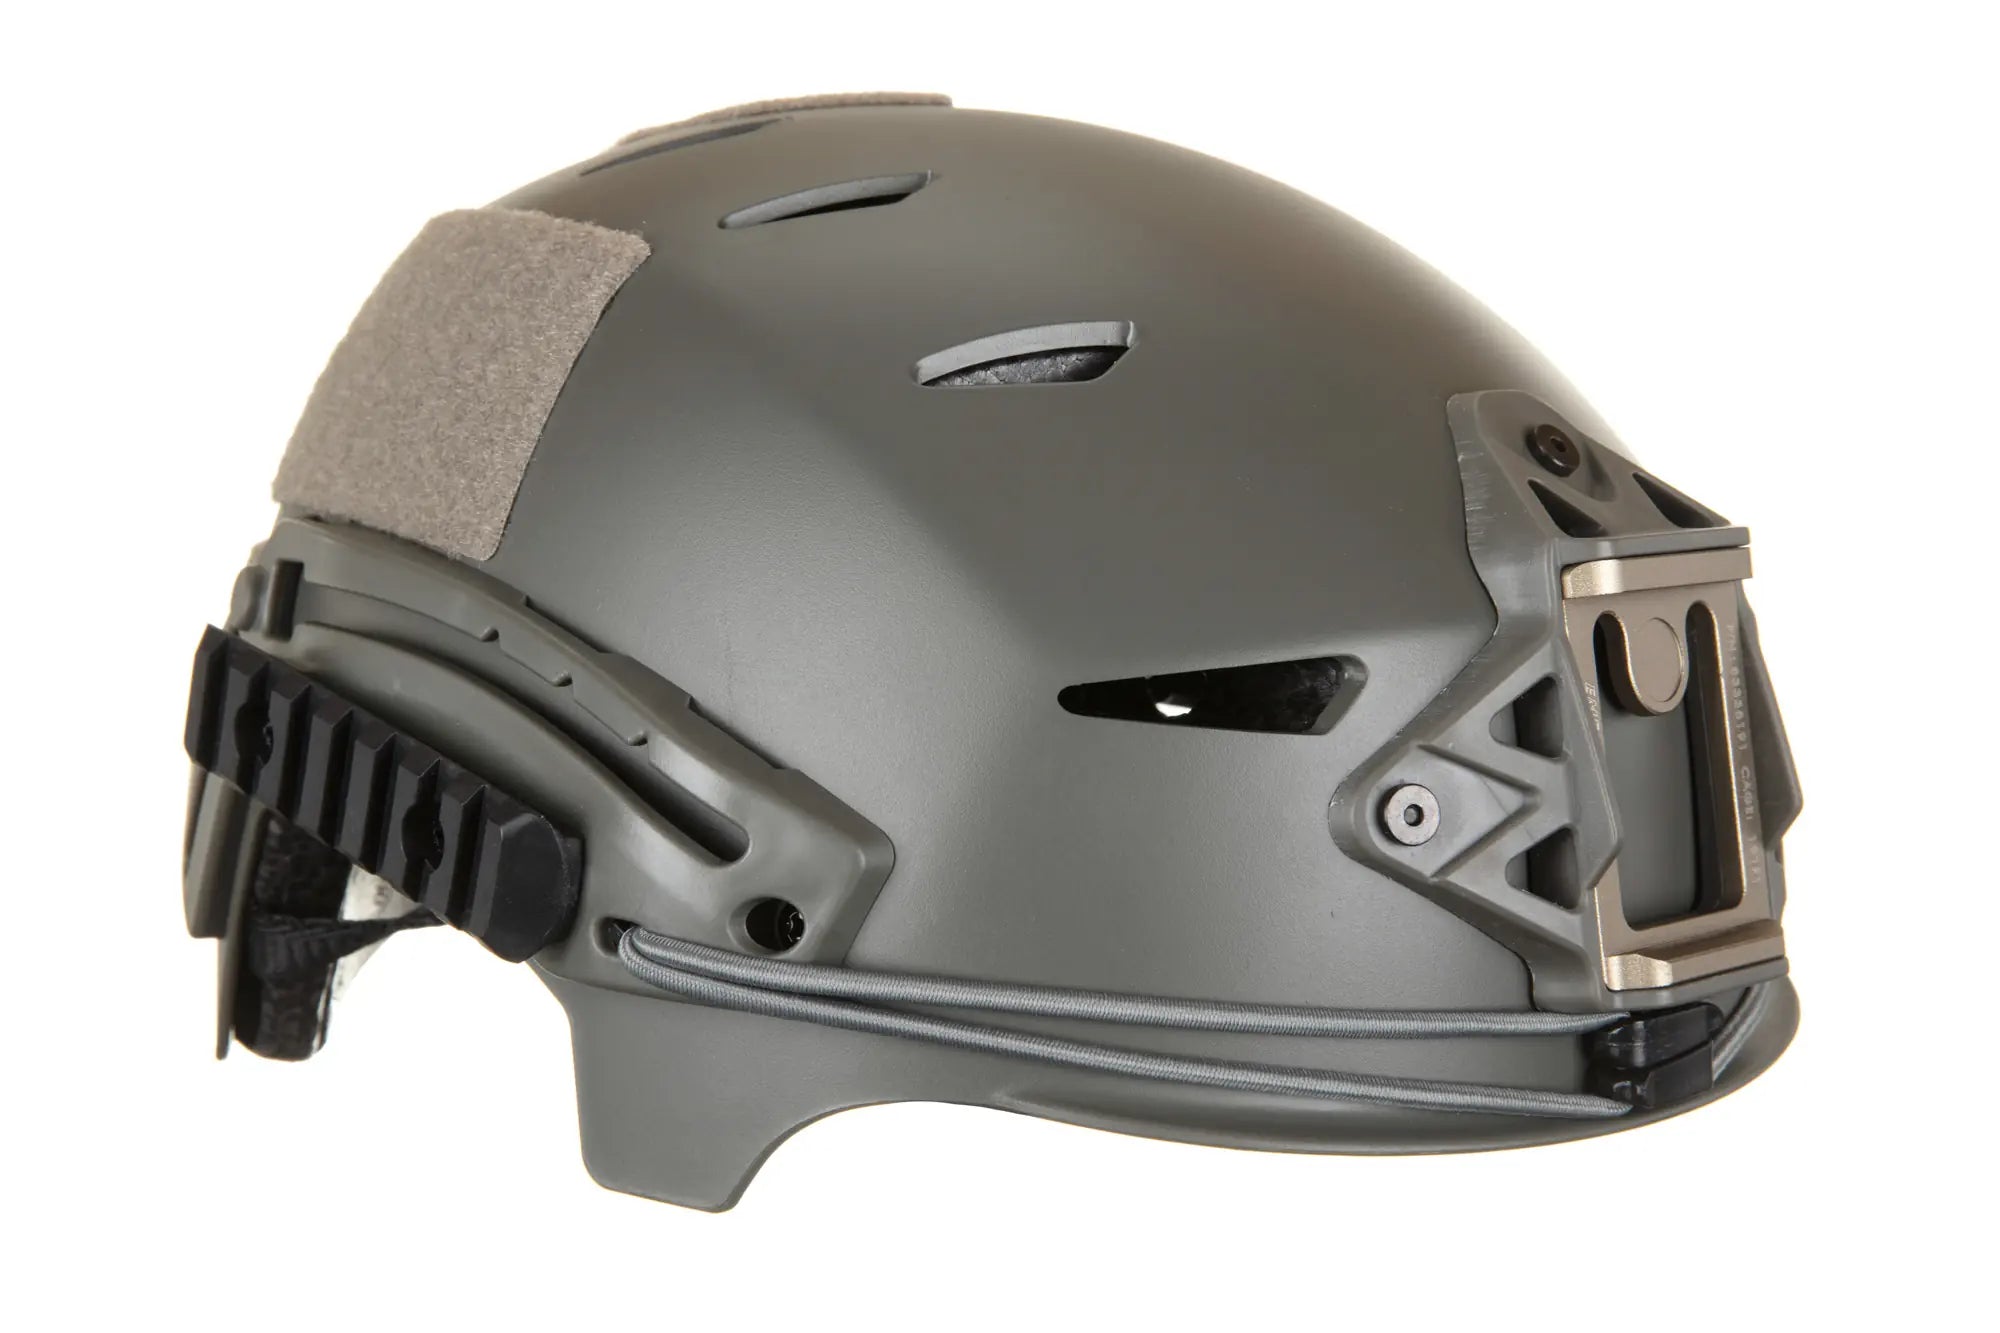 Replica of Emerson Gear EXF Bump style helmet Eco Foliage Green-2